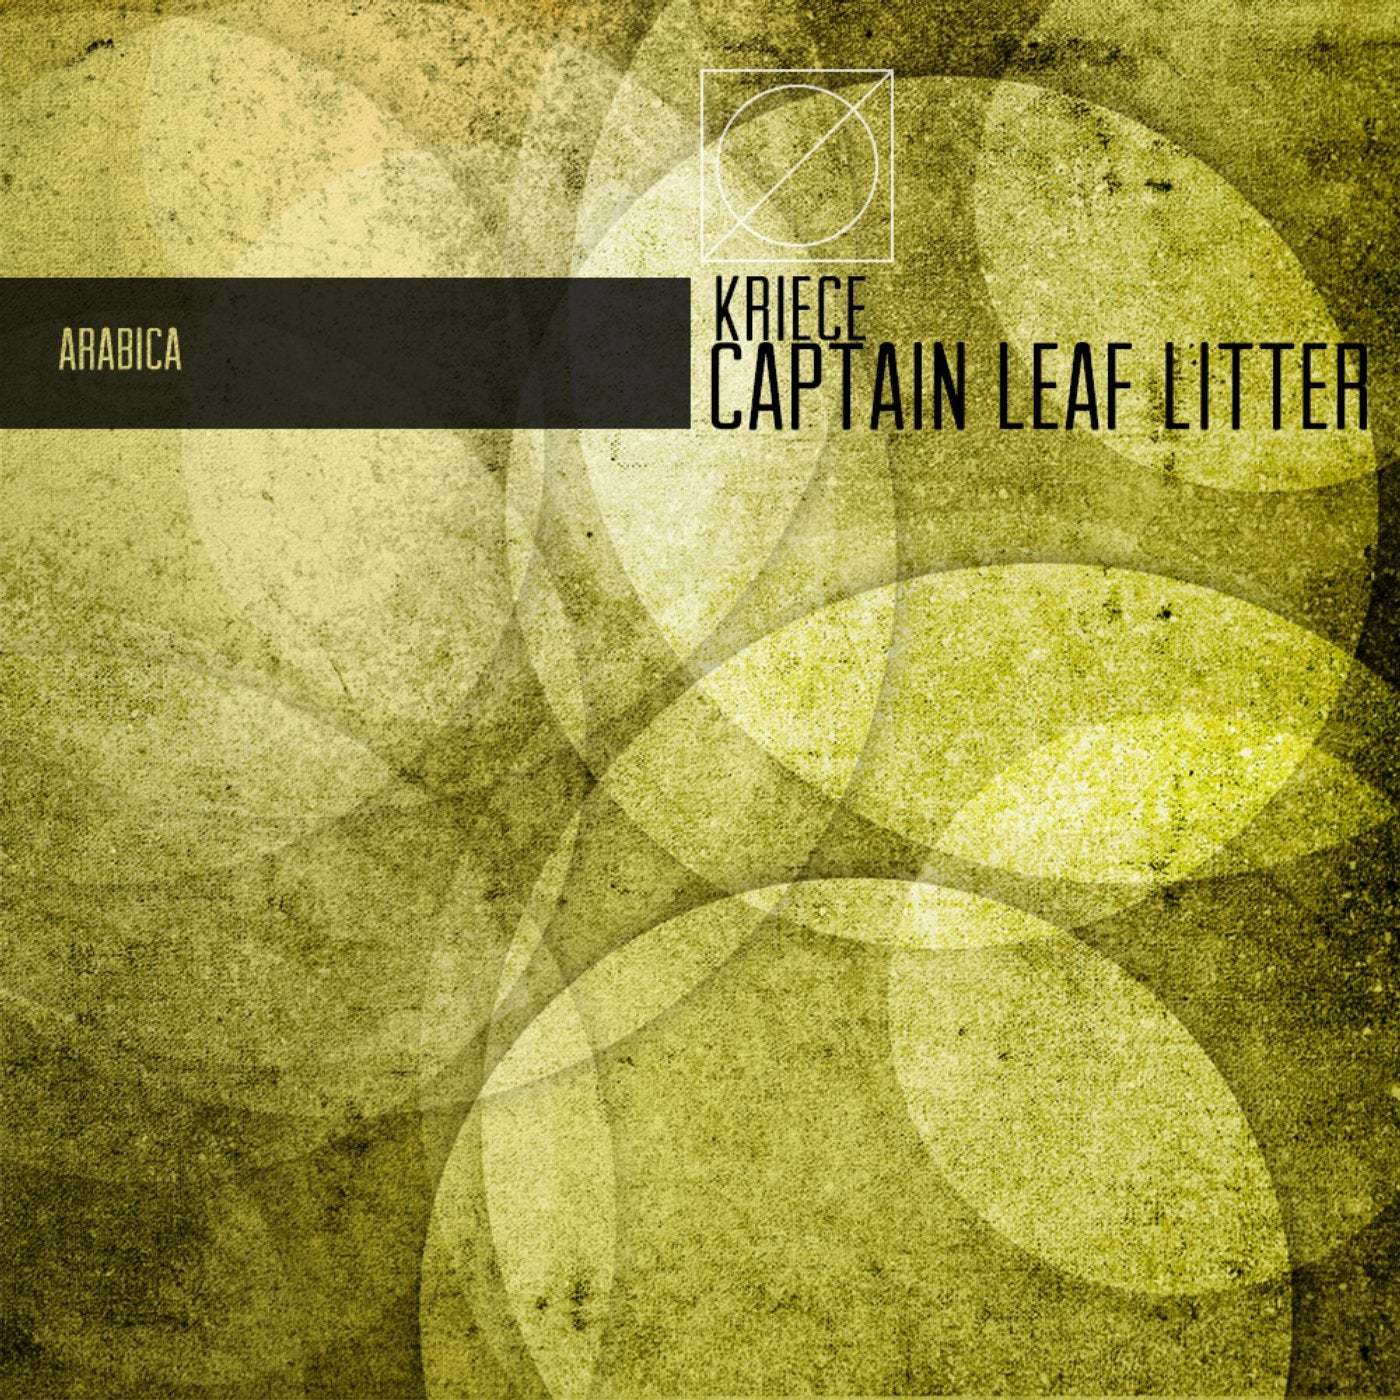 Captain Leaf Litter